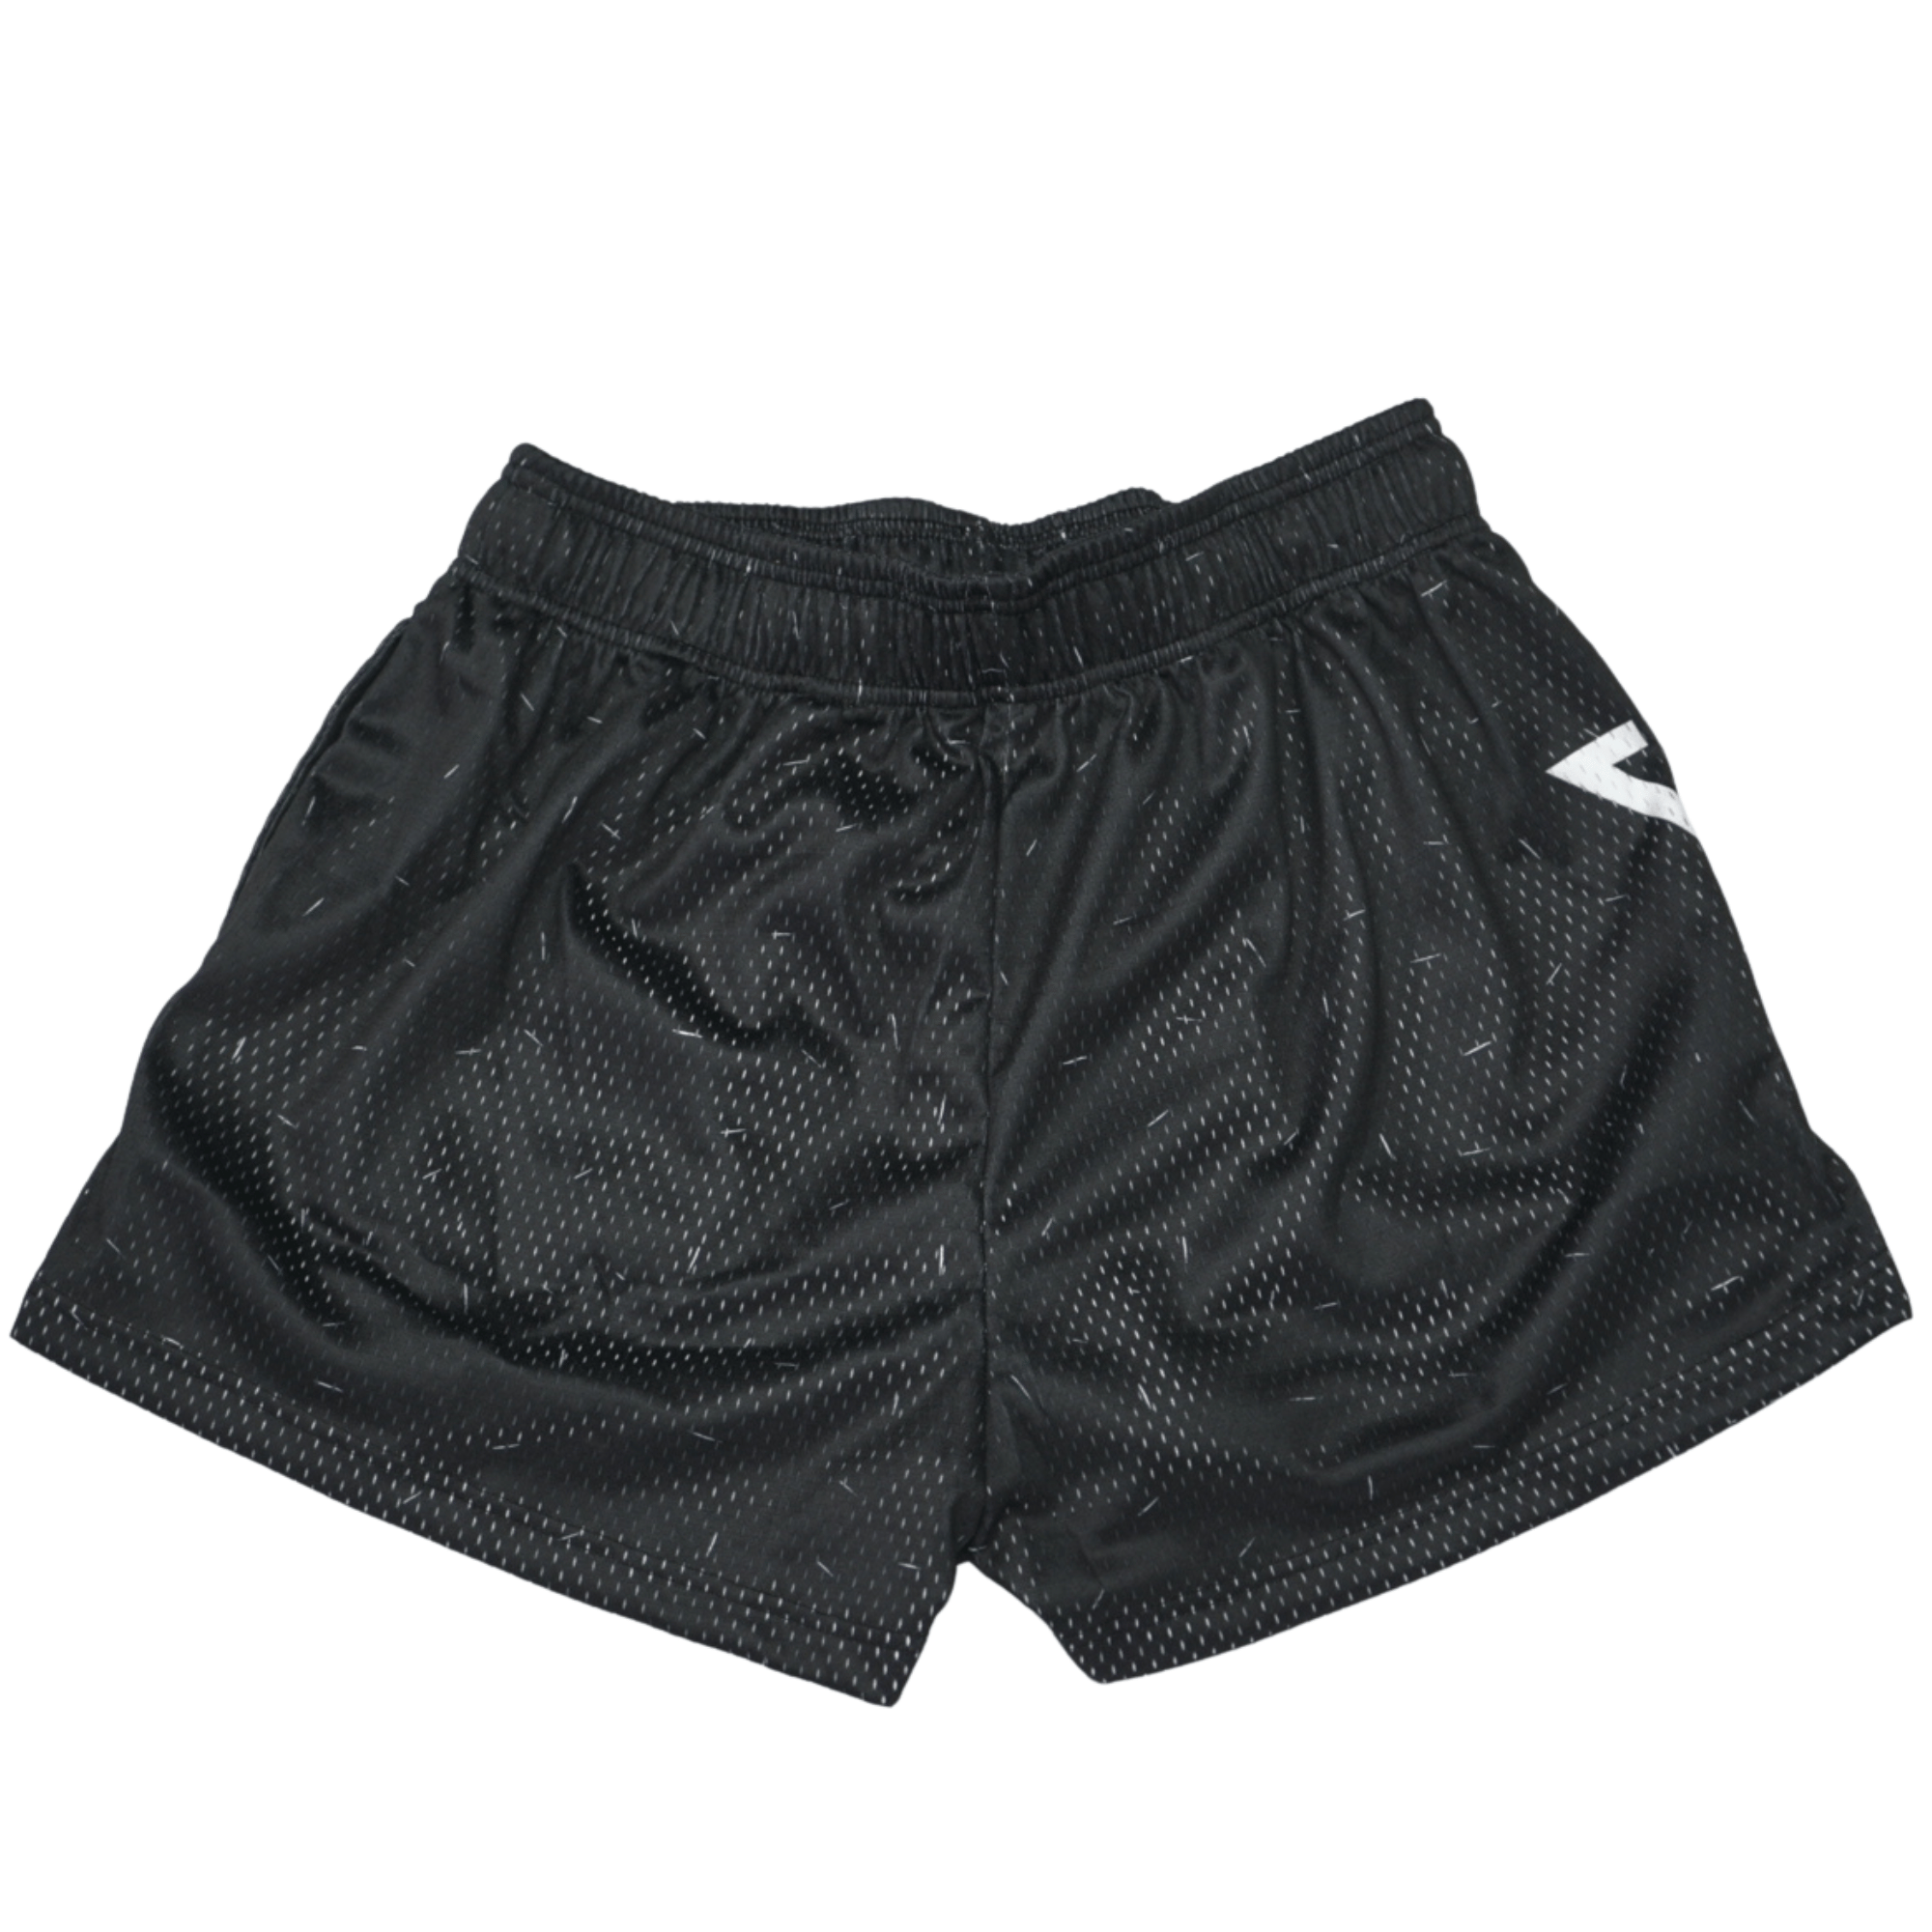 CLiO Women's Mesh Shaping Shorts - Black